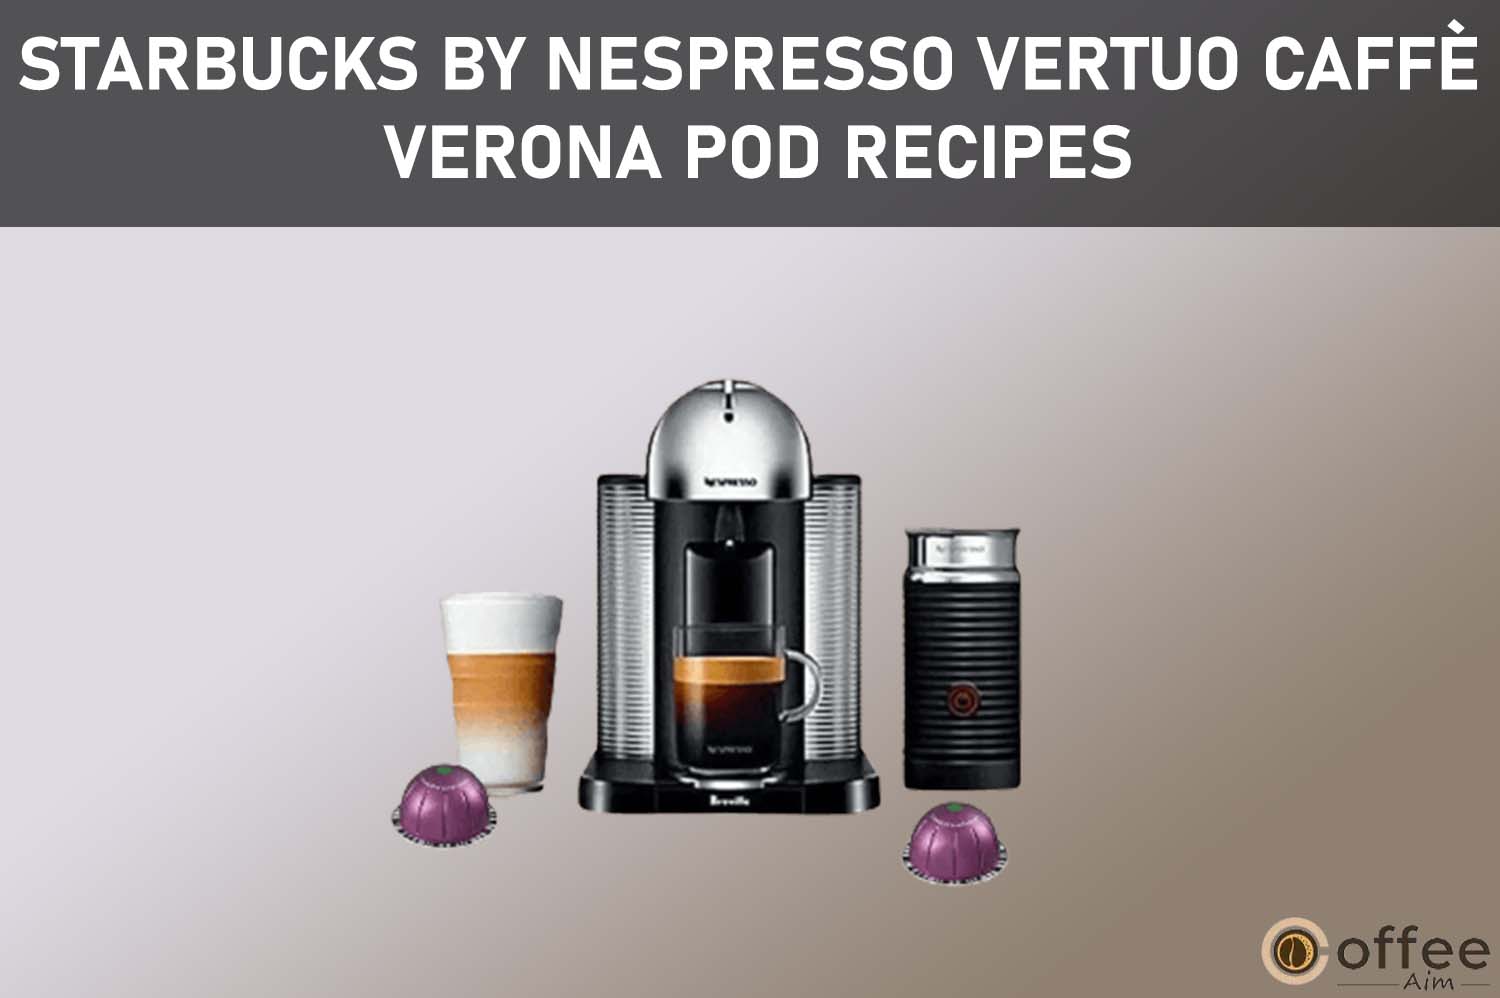 Featured image for the article "Starbucks by Nespresso Vertuo Caffè Verona Pod Recipes"